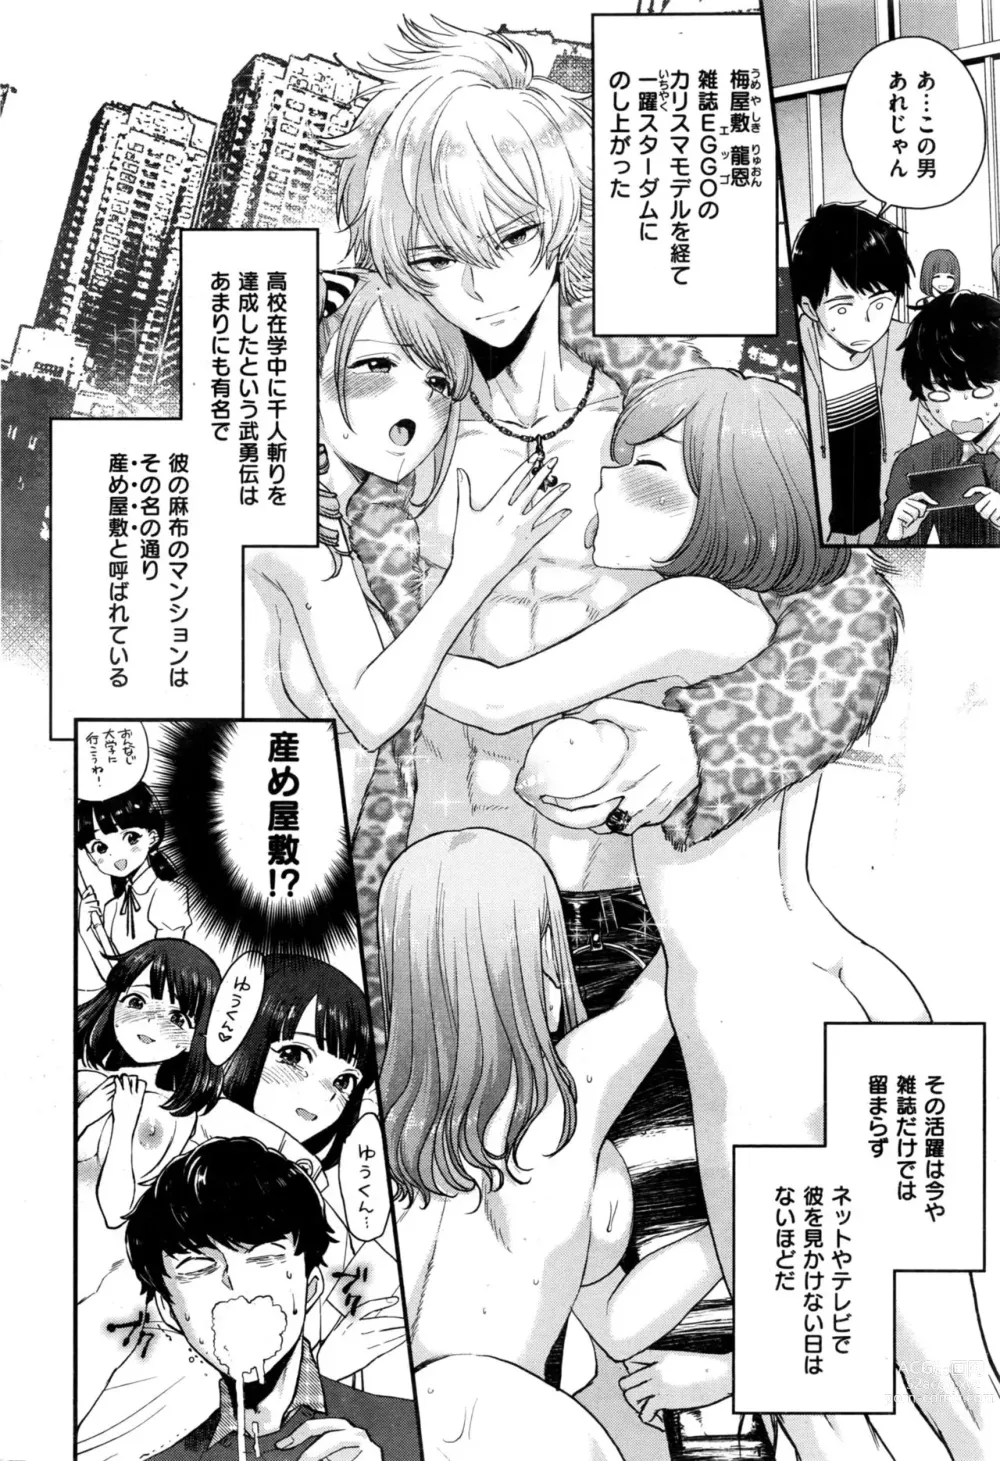 Page 2 of manga Masaka Sakasama